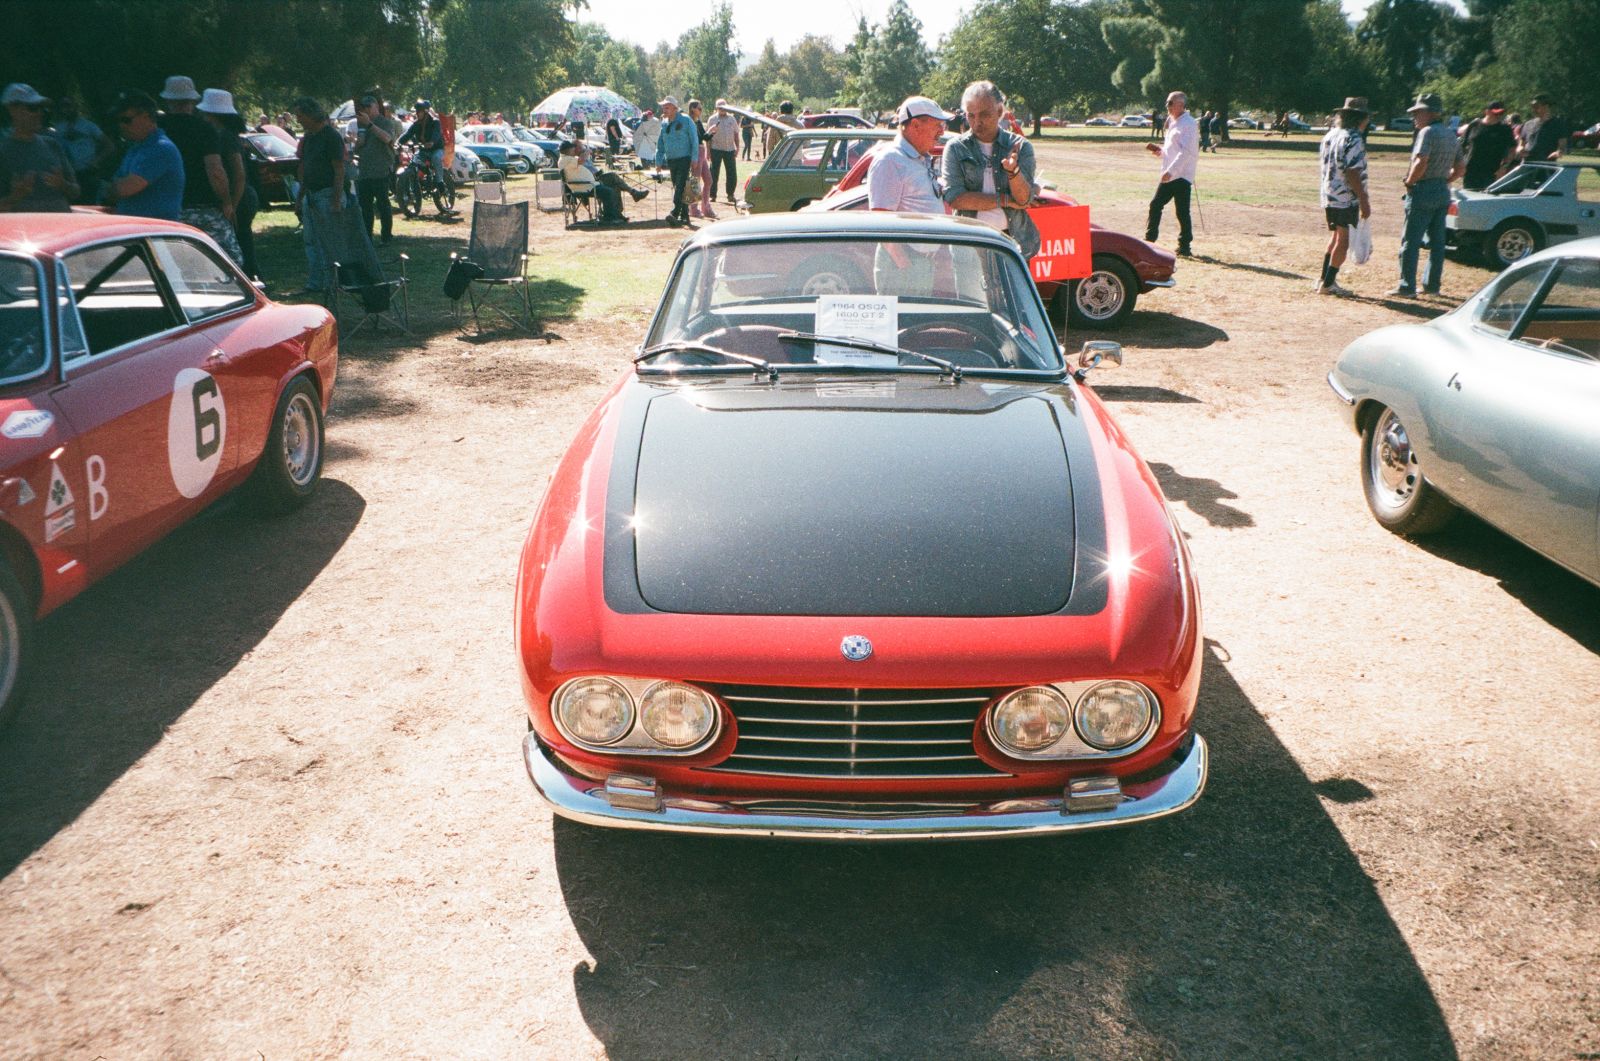 This OSCA Maserati 1600 GT2 was a rad surprise. Rare car.